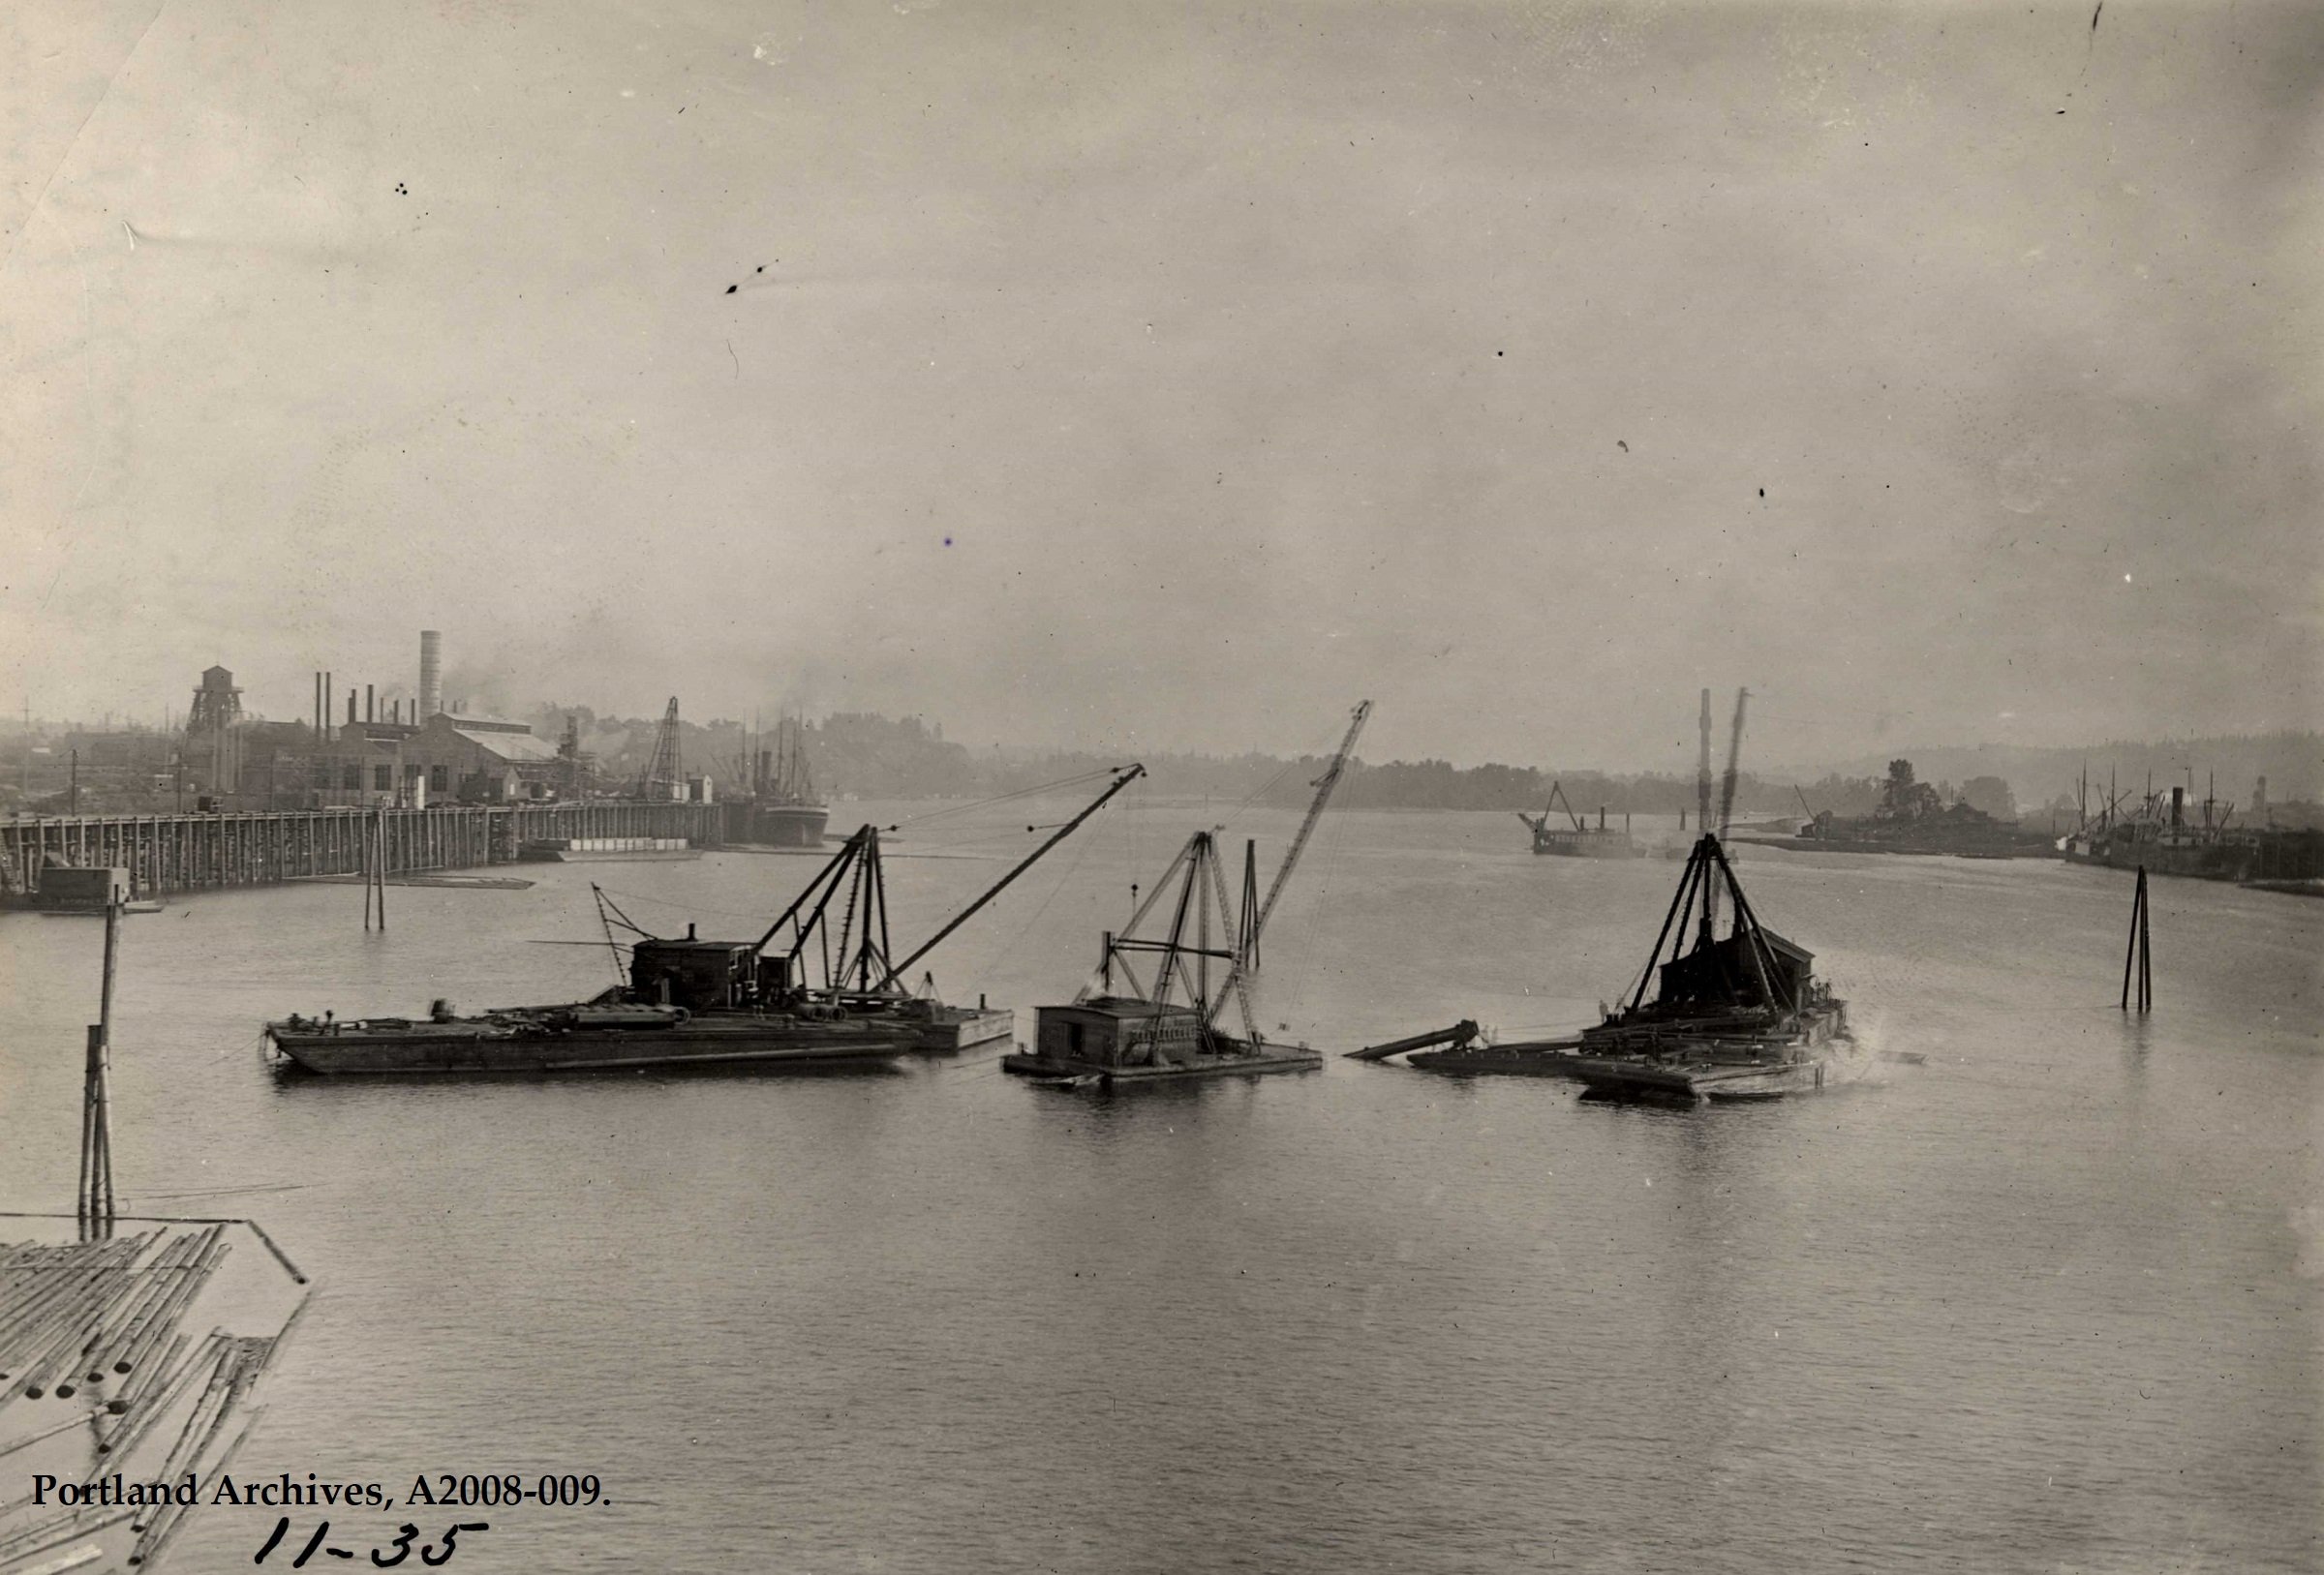 Water Bureau - Water Bureau (Archival) - Photographs - Willamette River conduit crossing with barges in harbor 1911.JPG